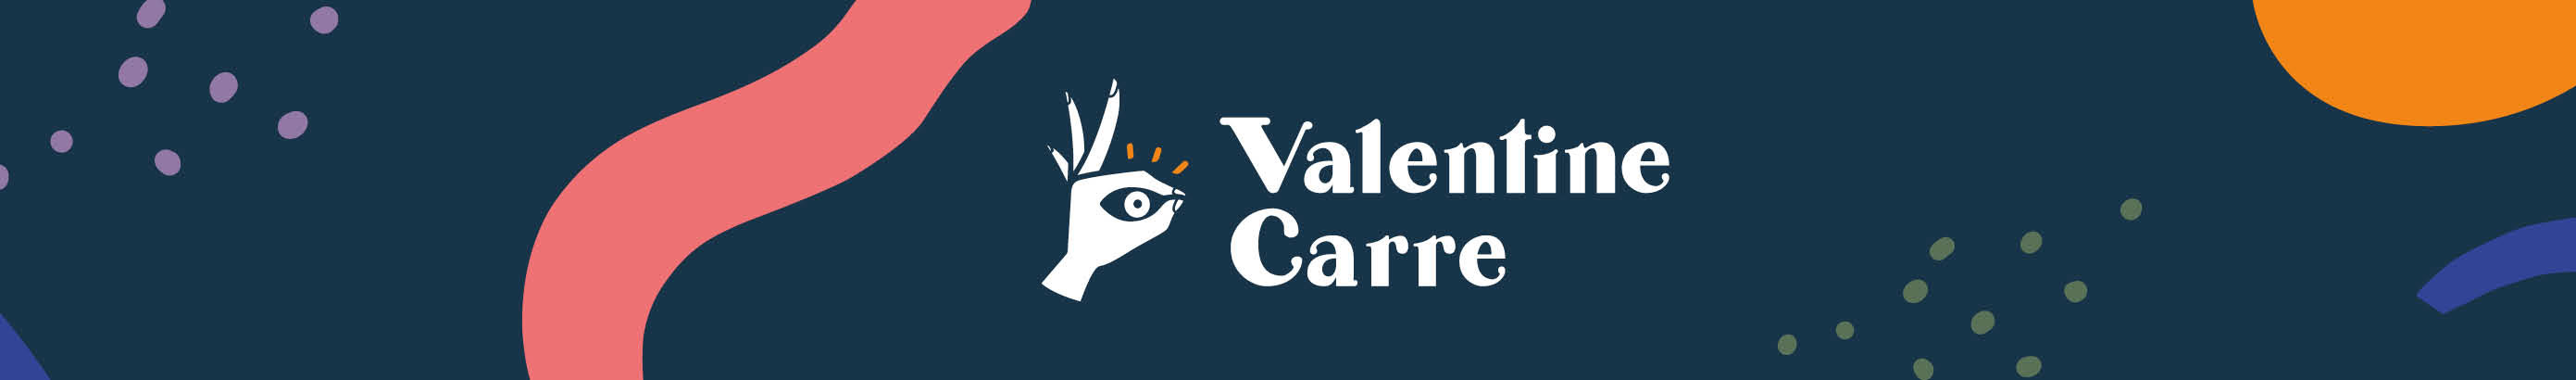 ✳ Valentine ✳ Carre ✳s profilbanner